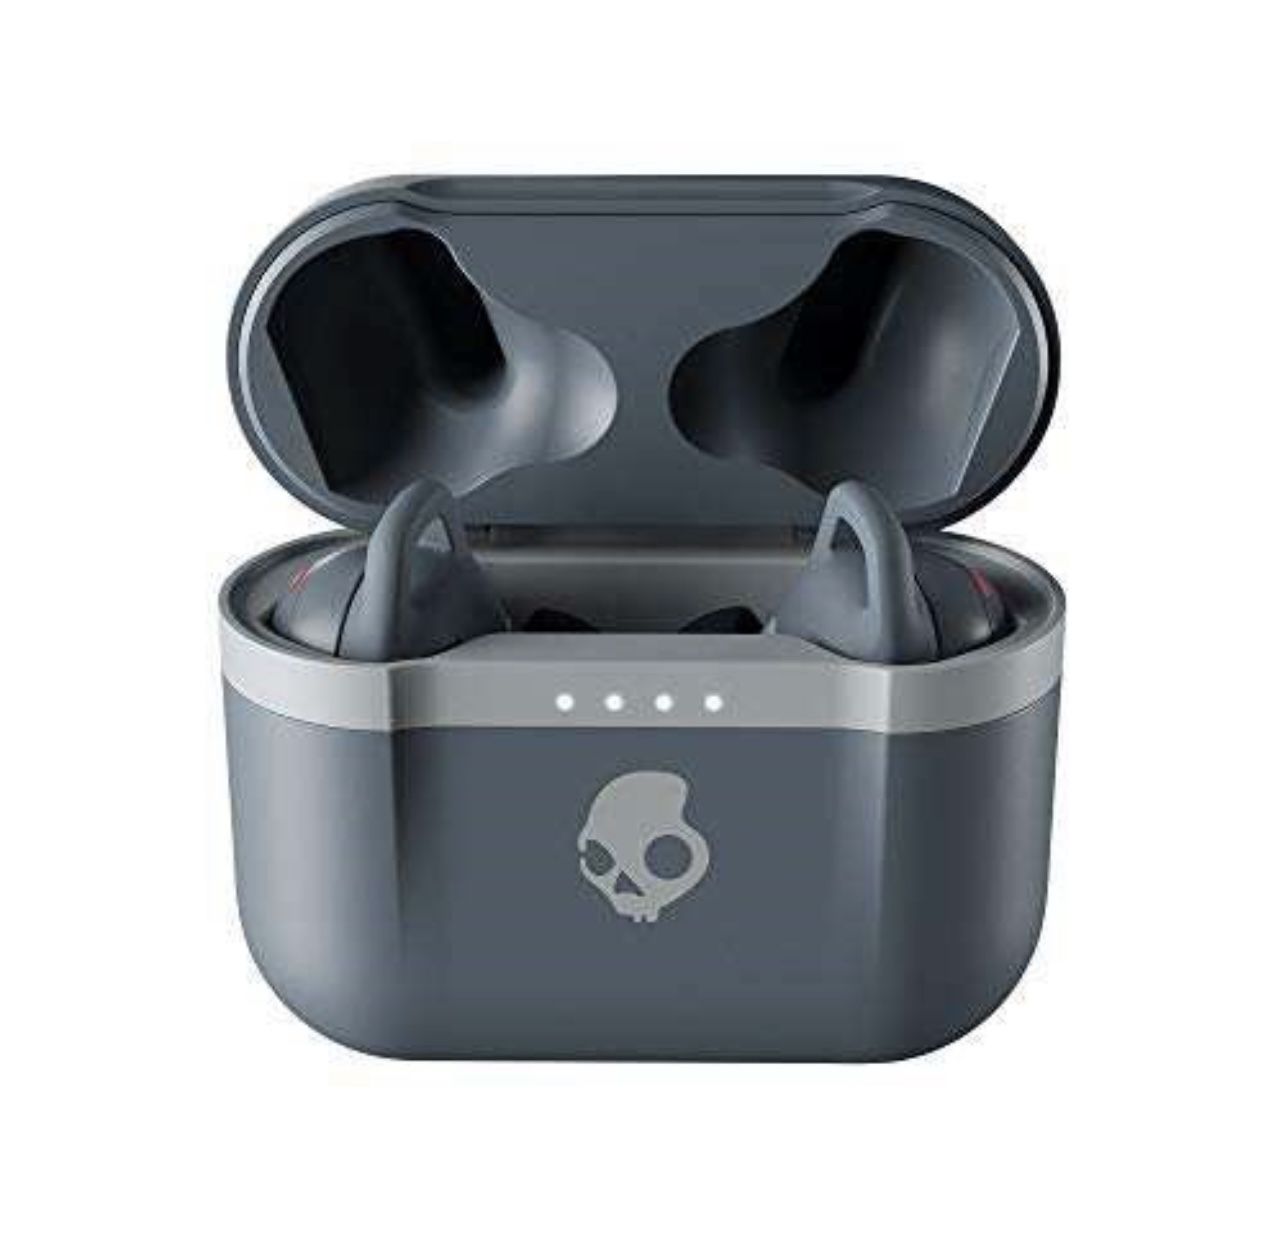 Skullcandy Indy Evo In-Ear Wireless Earbuds, 30 Hr Battery, Microphone, Works wi